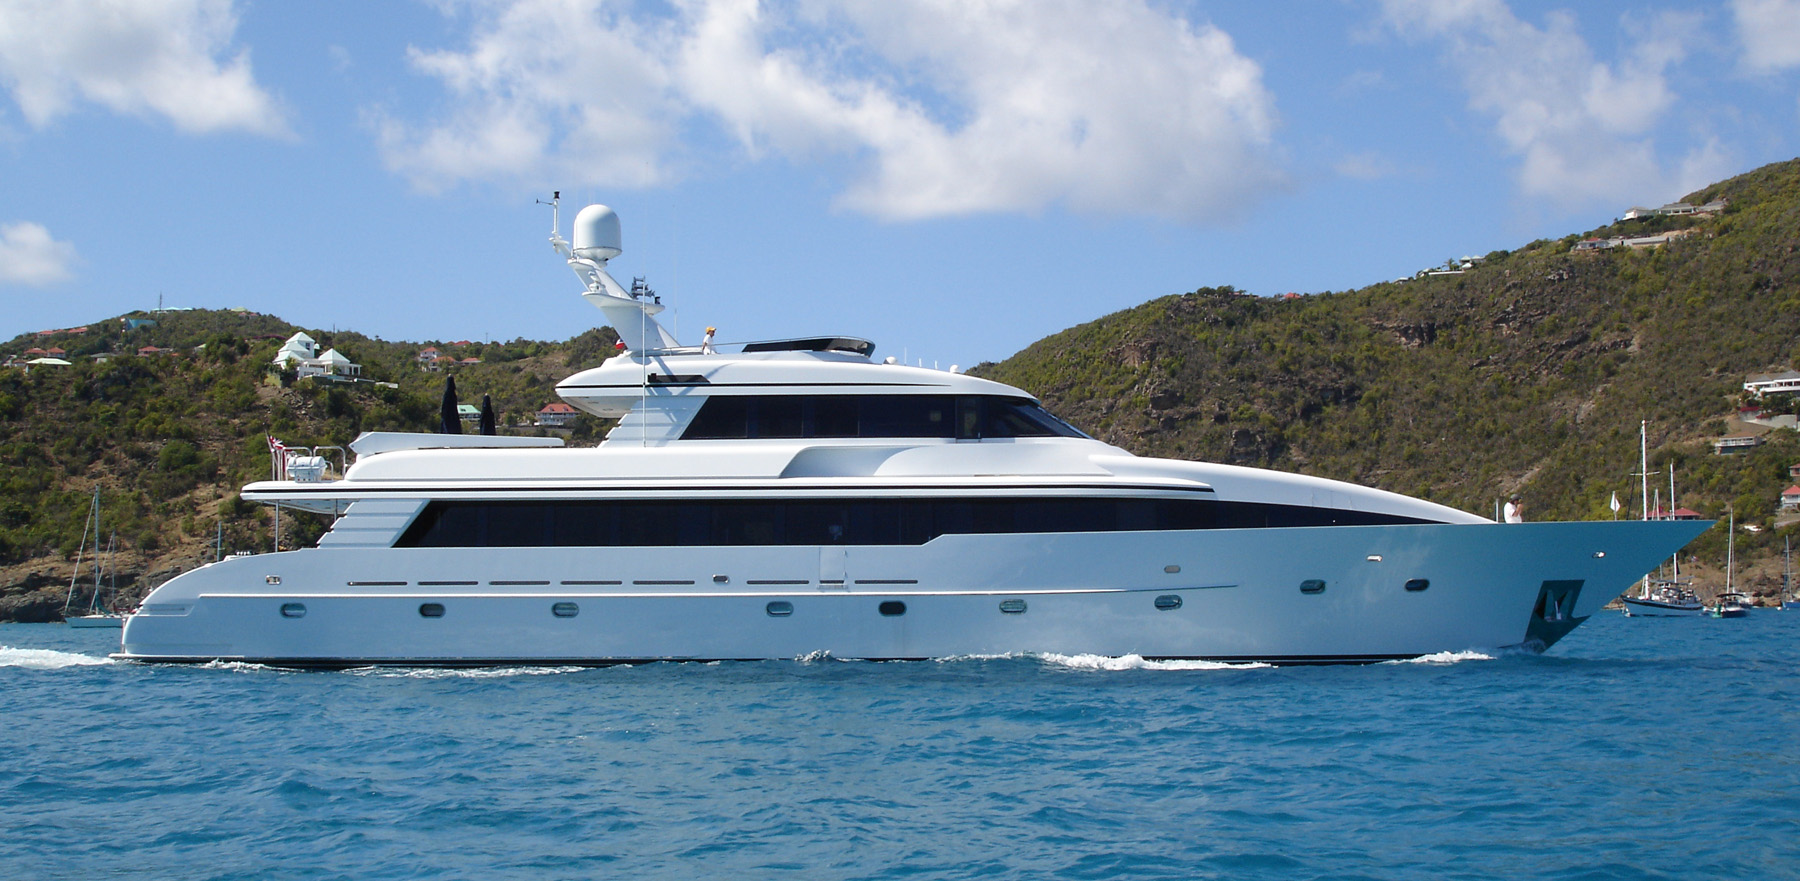 Sea Dreams yacht Charter Brochure